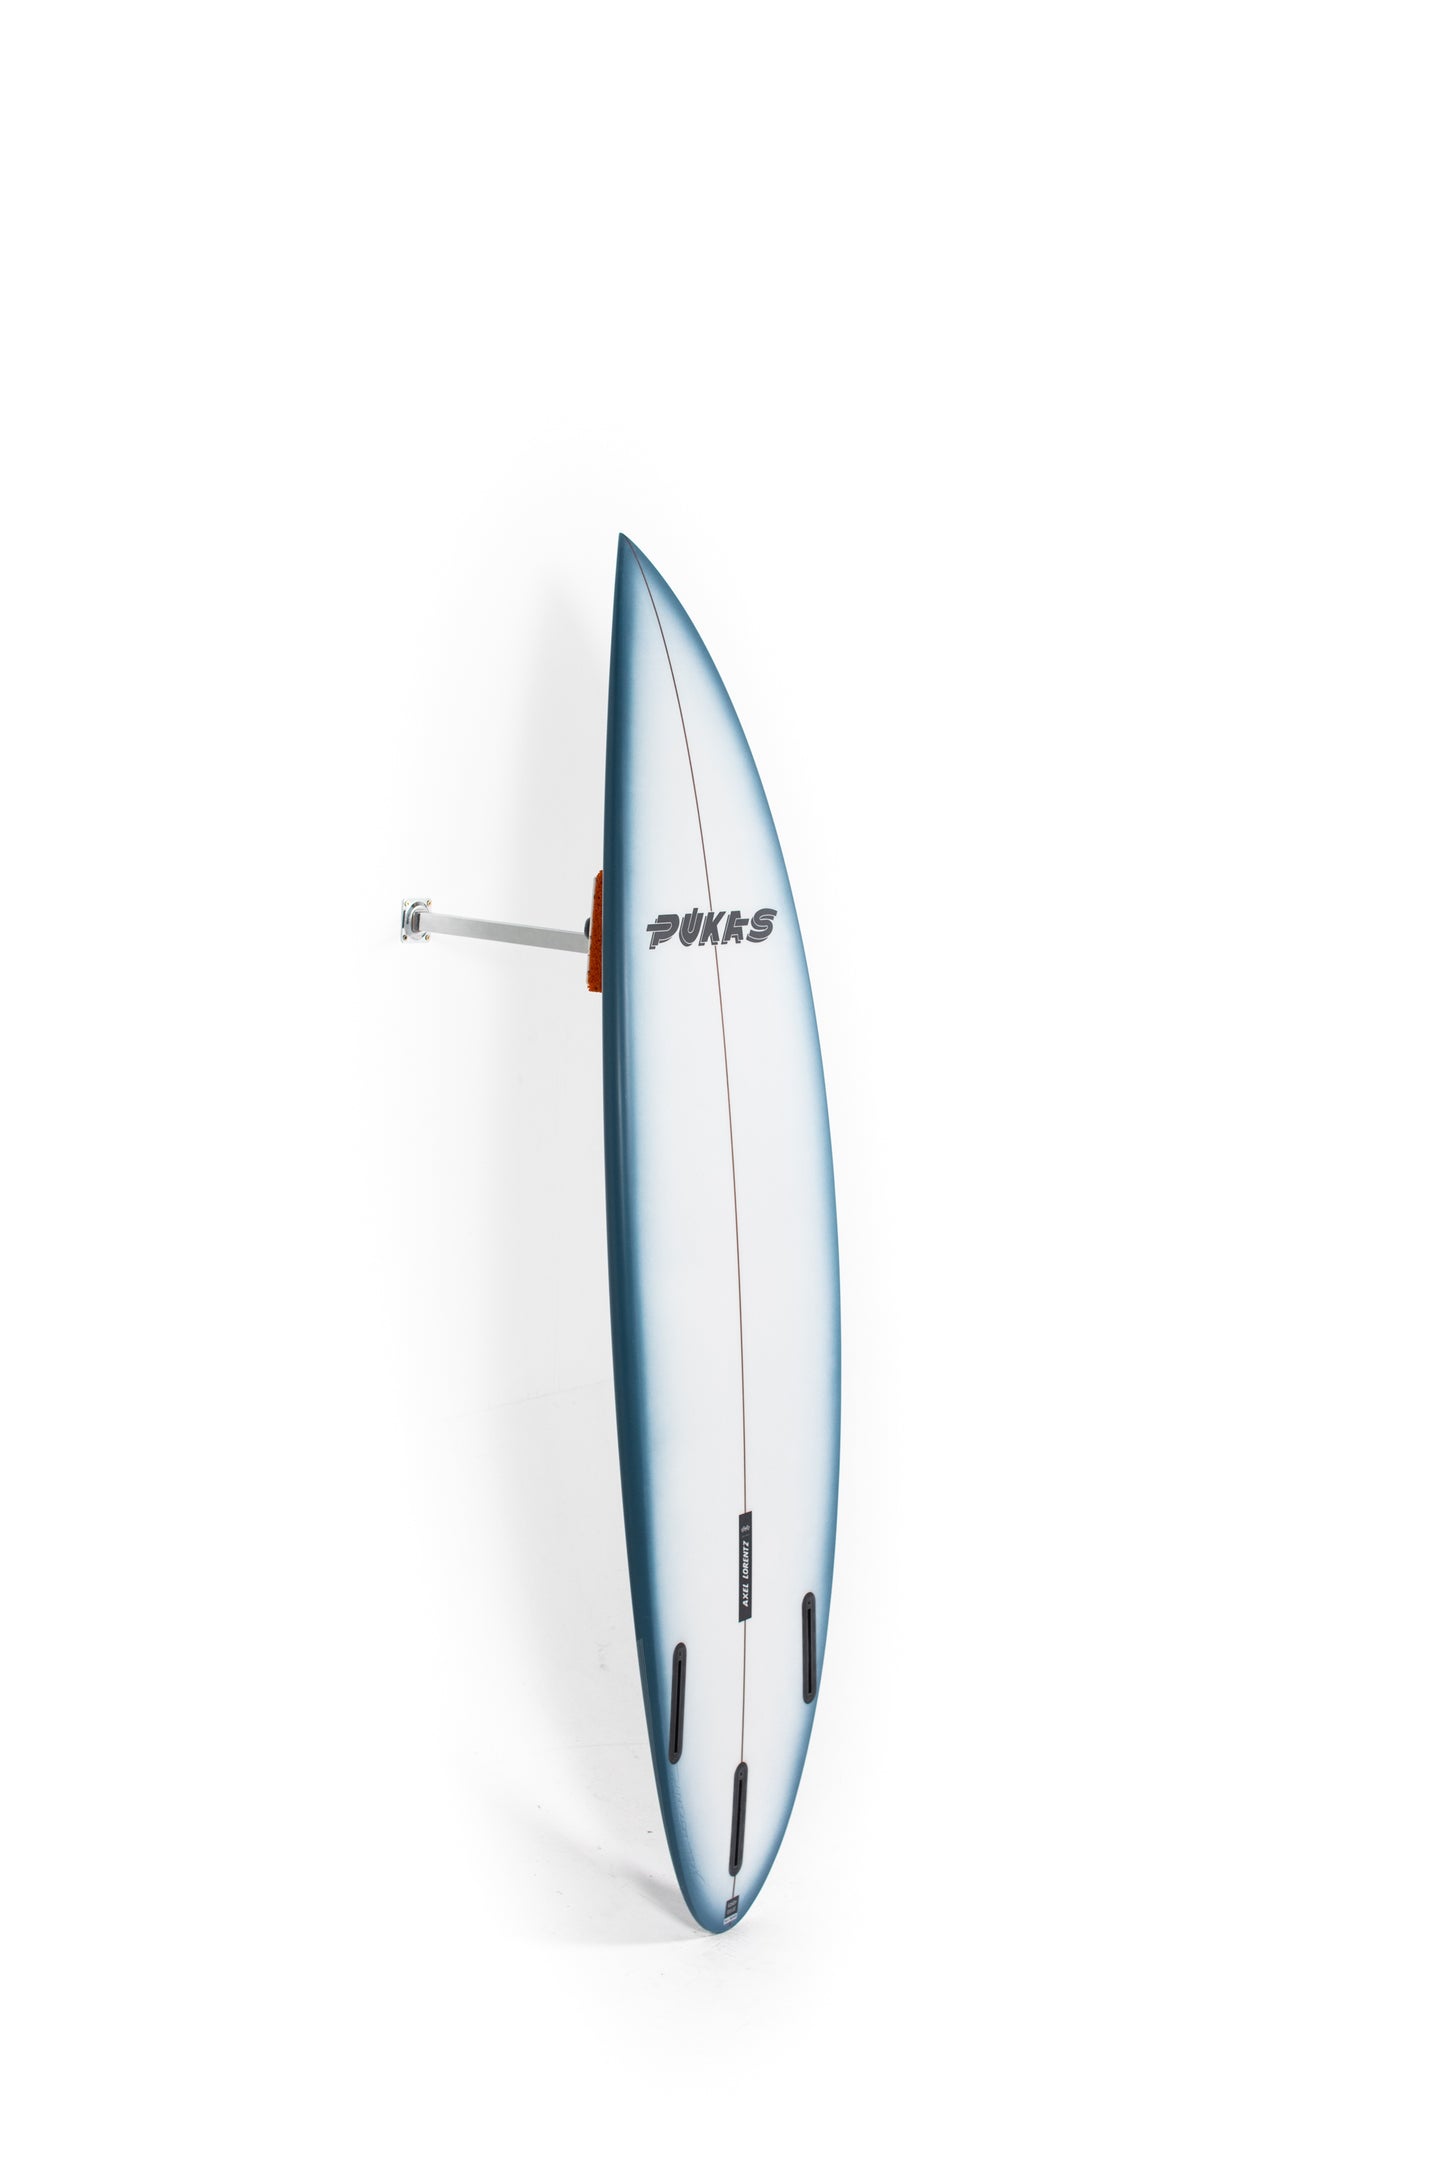 
                  
                    Pukas-Surf-Shop-Pukas-Surfboards-Ttar-Axel-Lorentz-5_10_
                  
                